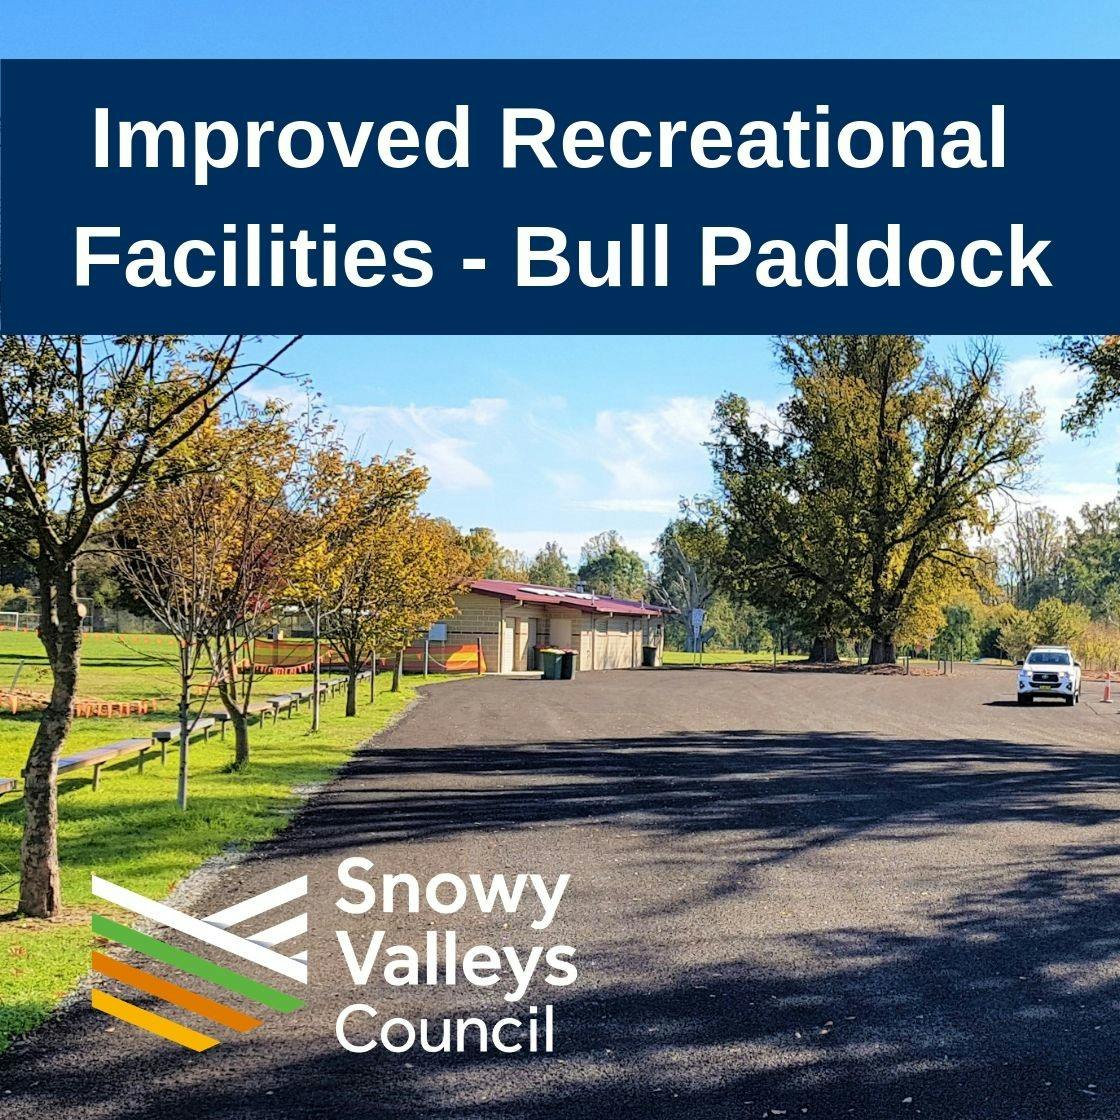 Improved Recreational Facilities - Bull Paddock